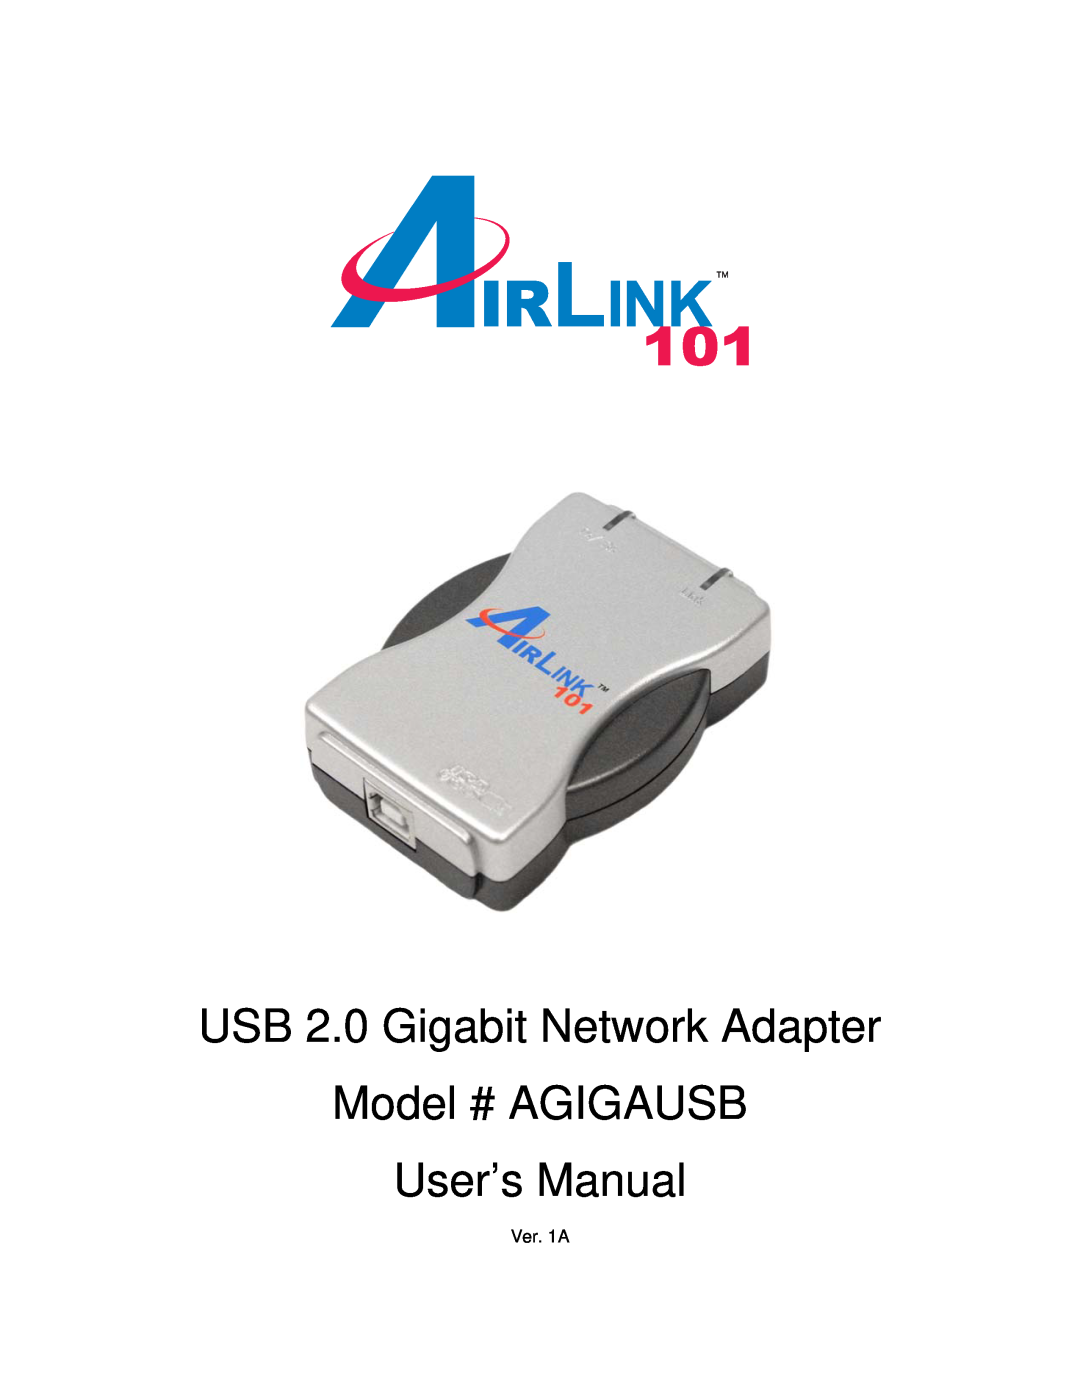 Airlink101 AGIGAUSB user manual USB 2.0 Gigabit Network Adapter, Ver. 1A 